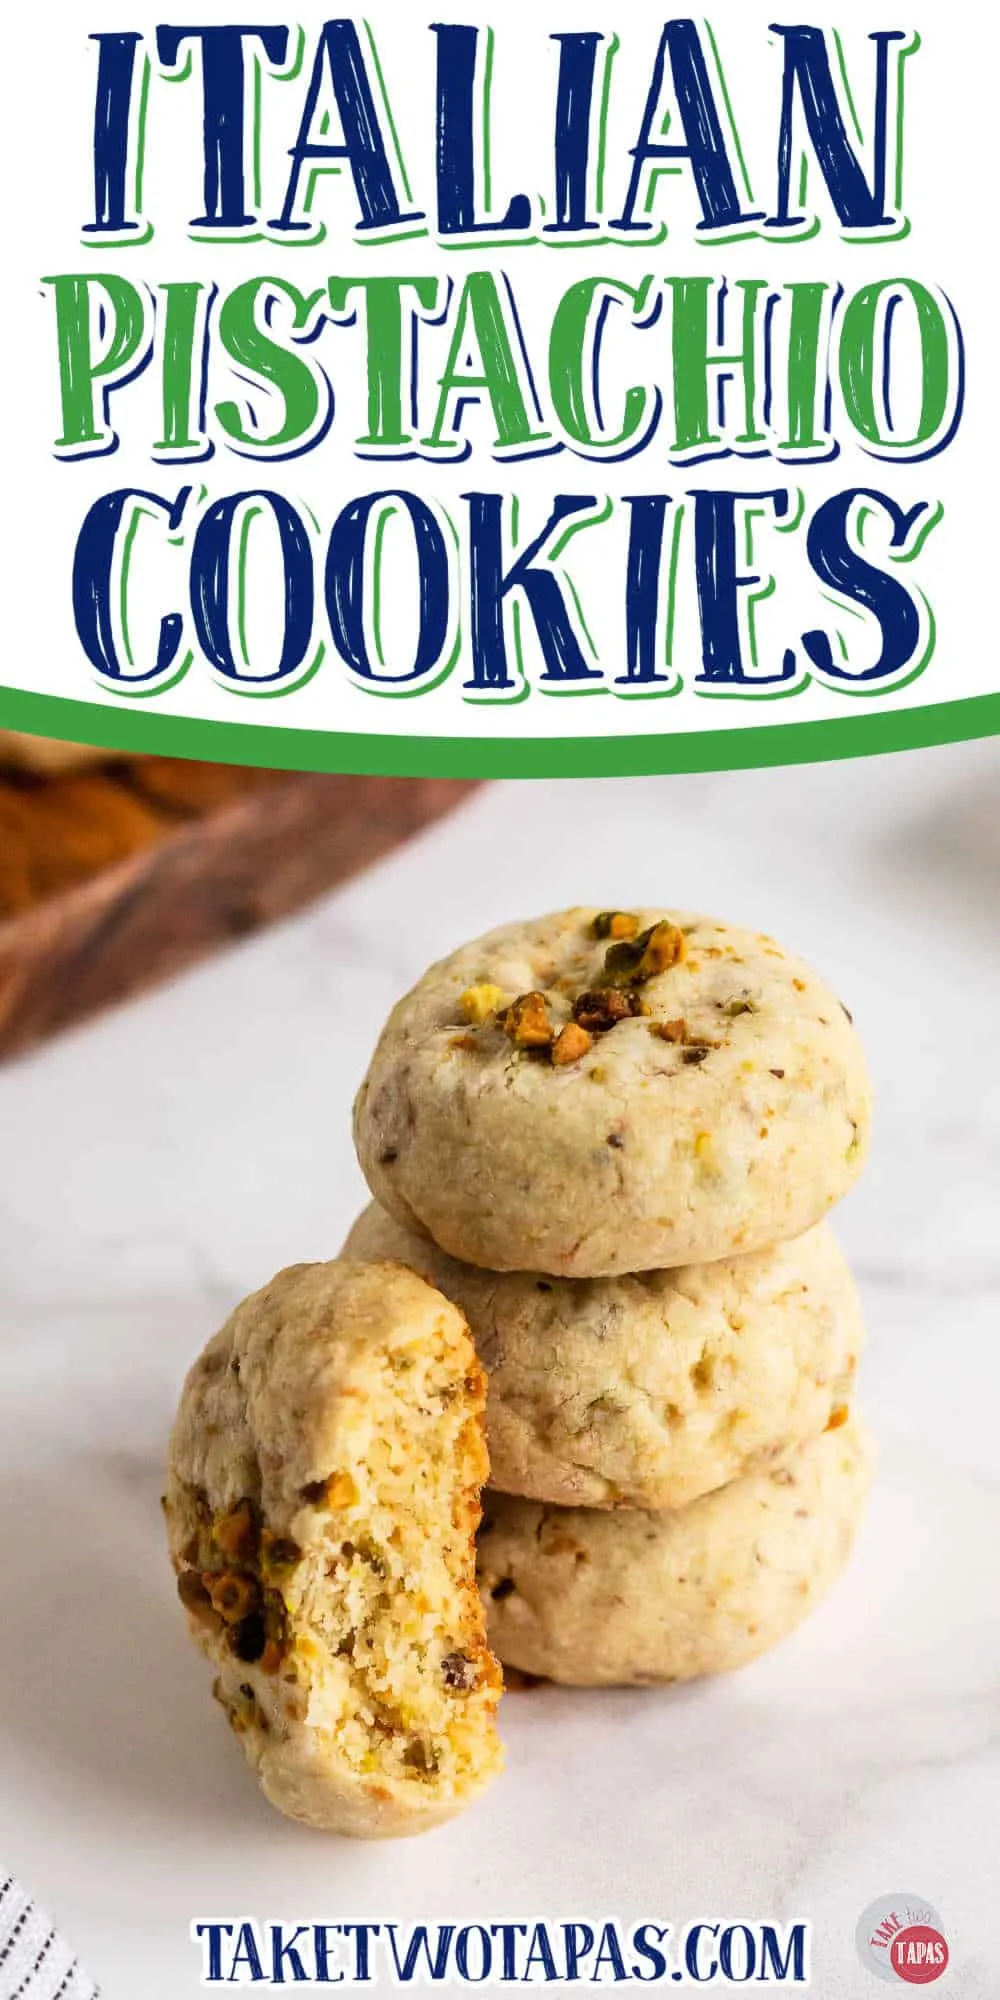 four cookies with text "italian pistachio cookies"